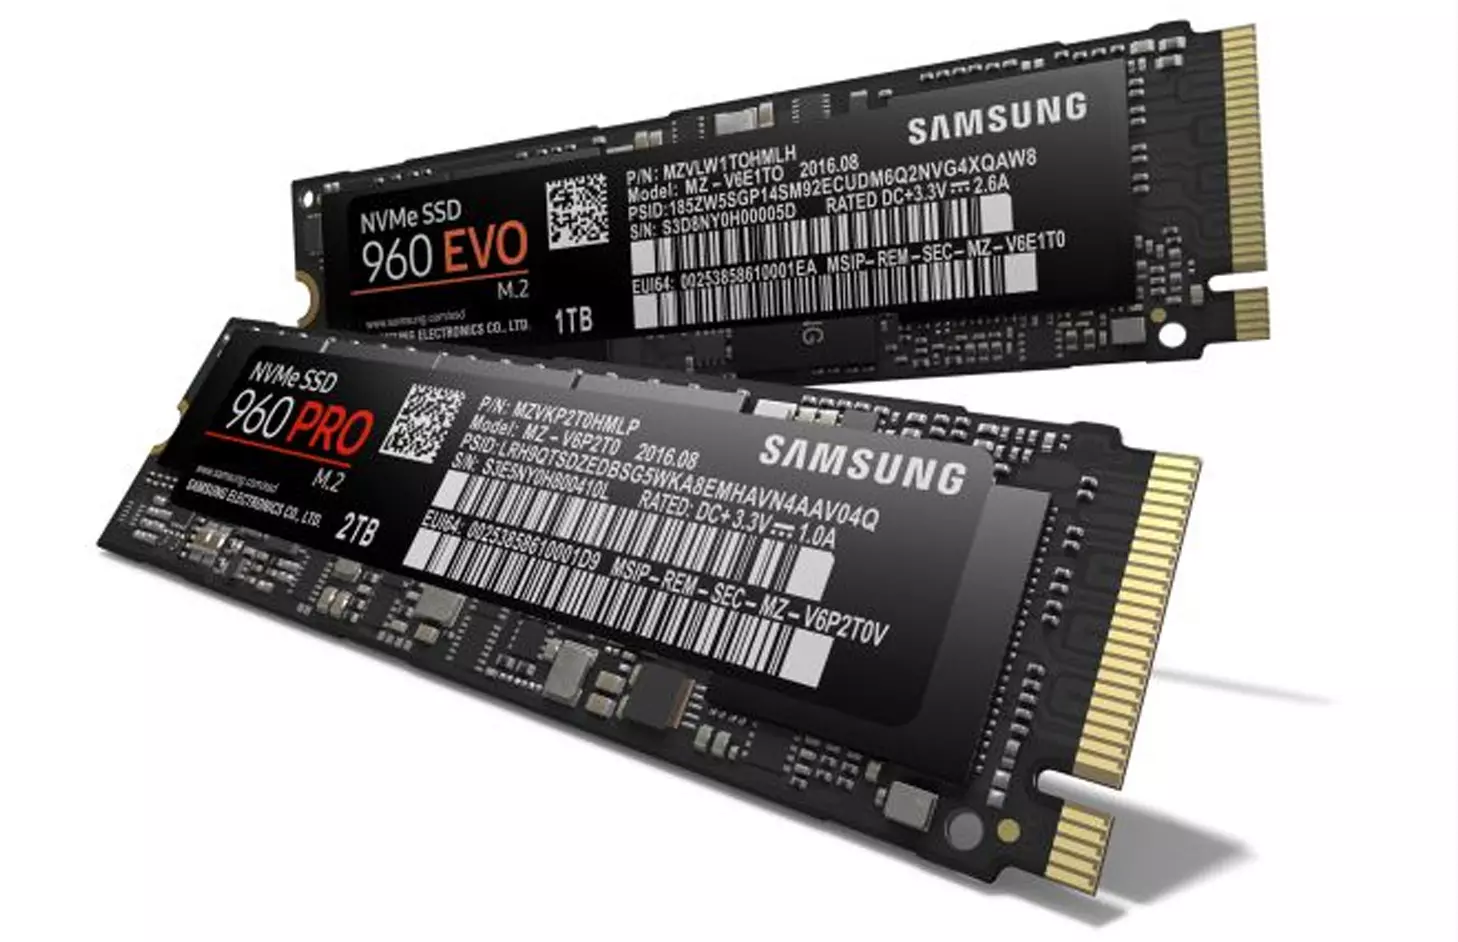 E1.s NVME SSD Samsung. Samsung SSD 950 Pro. Samsung 960 EVO. NVME Samsung 960 Pro. Максимальная память ssd